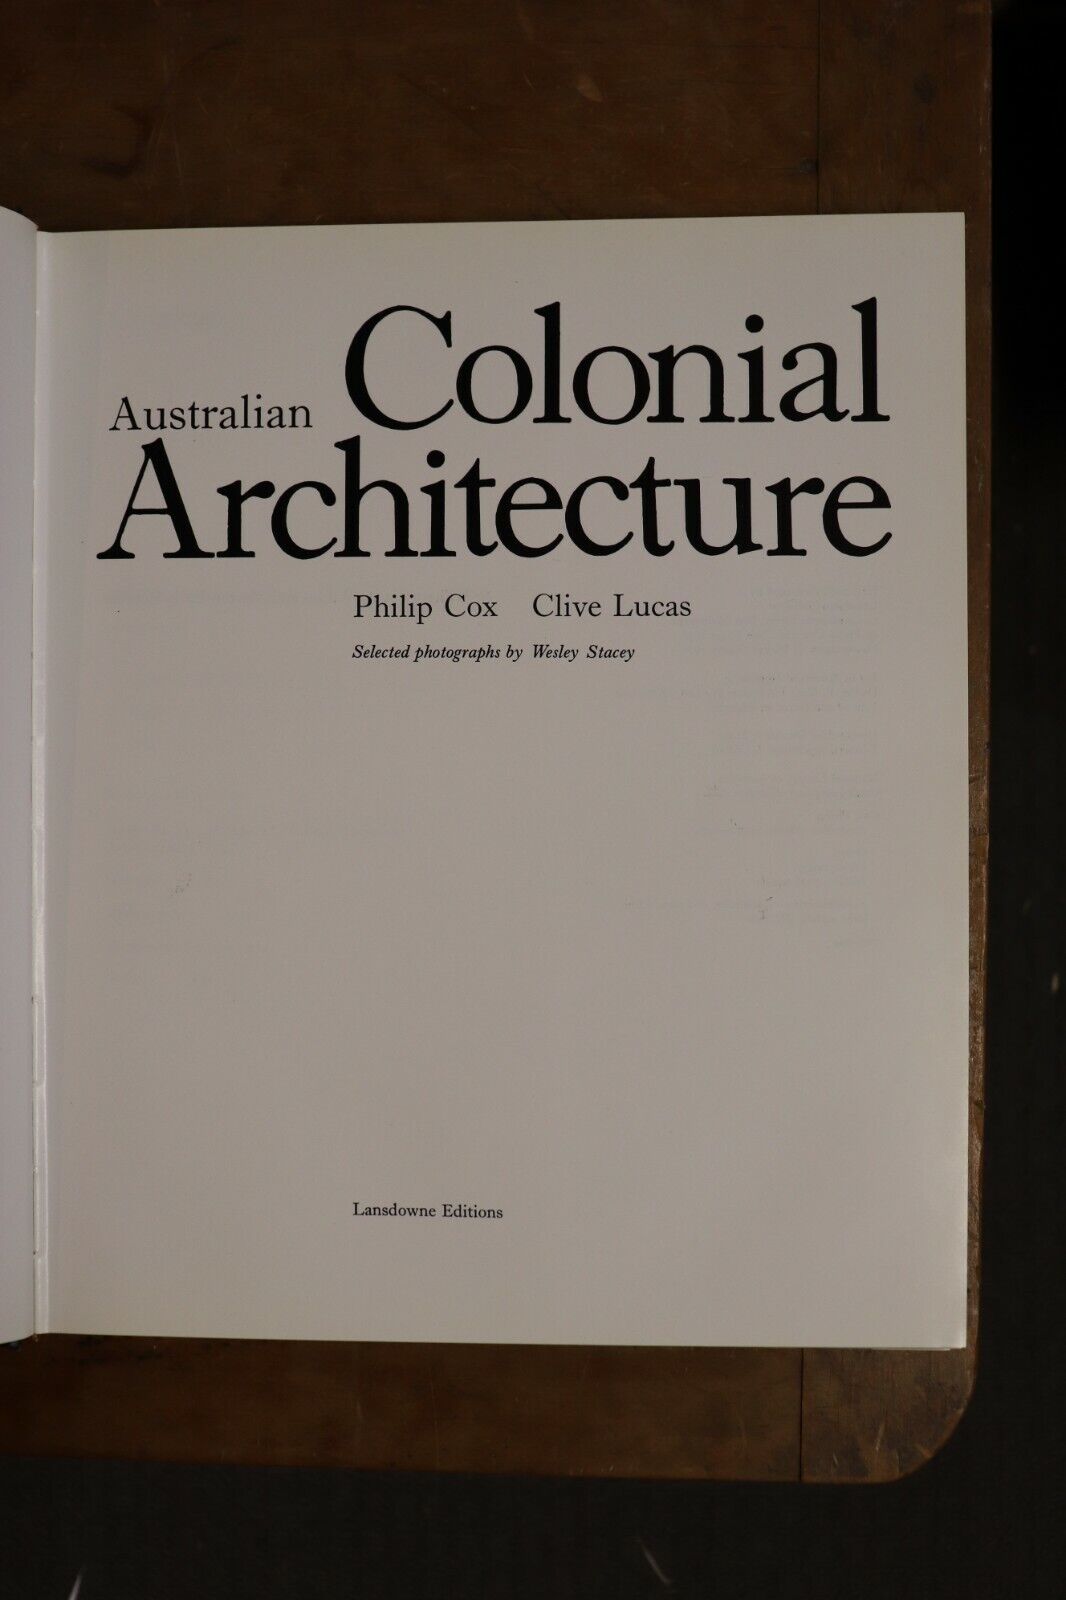 Australian Colonial Architecture - 1978 - 1st Edition Architecture Book - 0